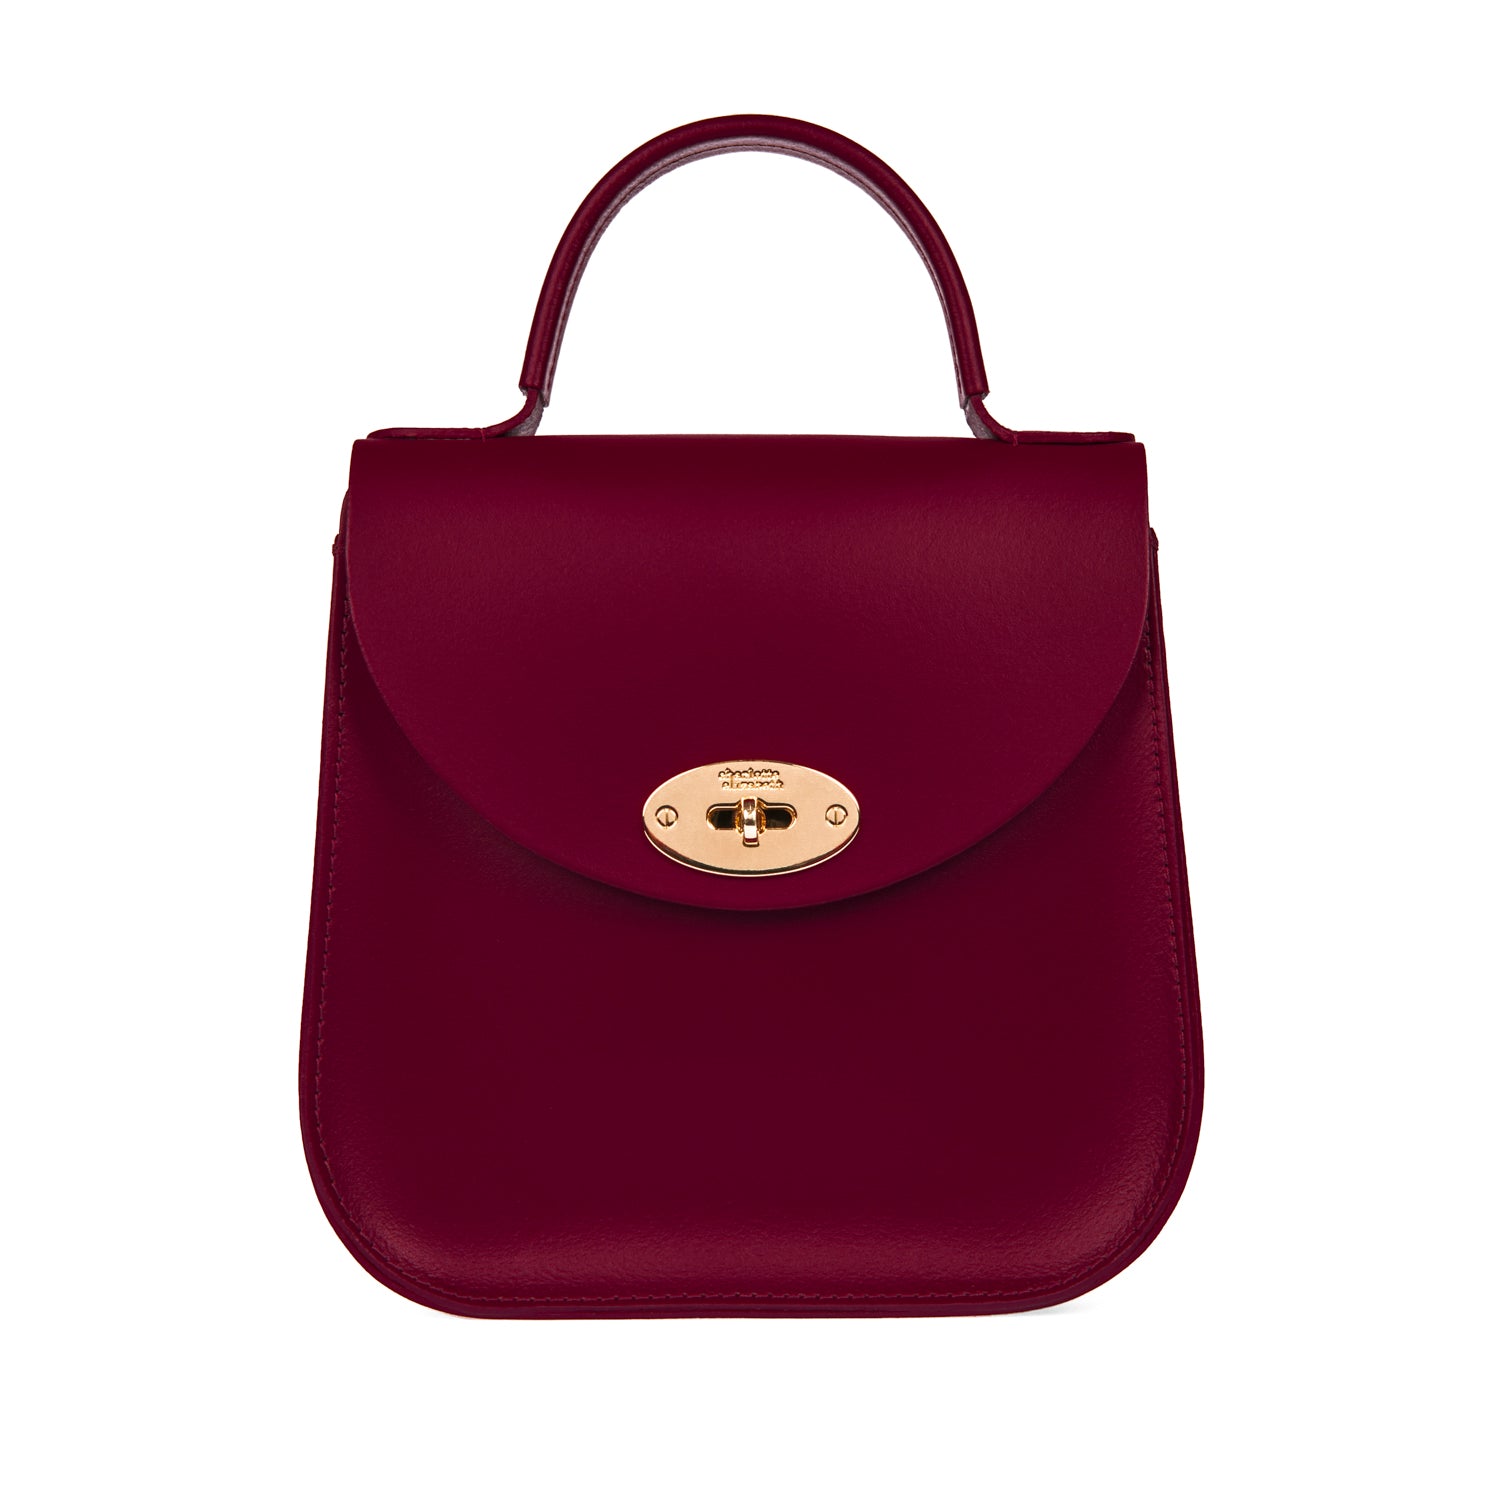 Handmade Pink Calfskin Bag. Designer Handbag With Strap and 